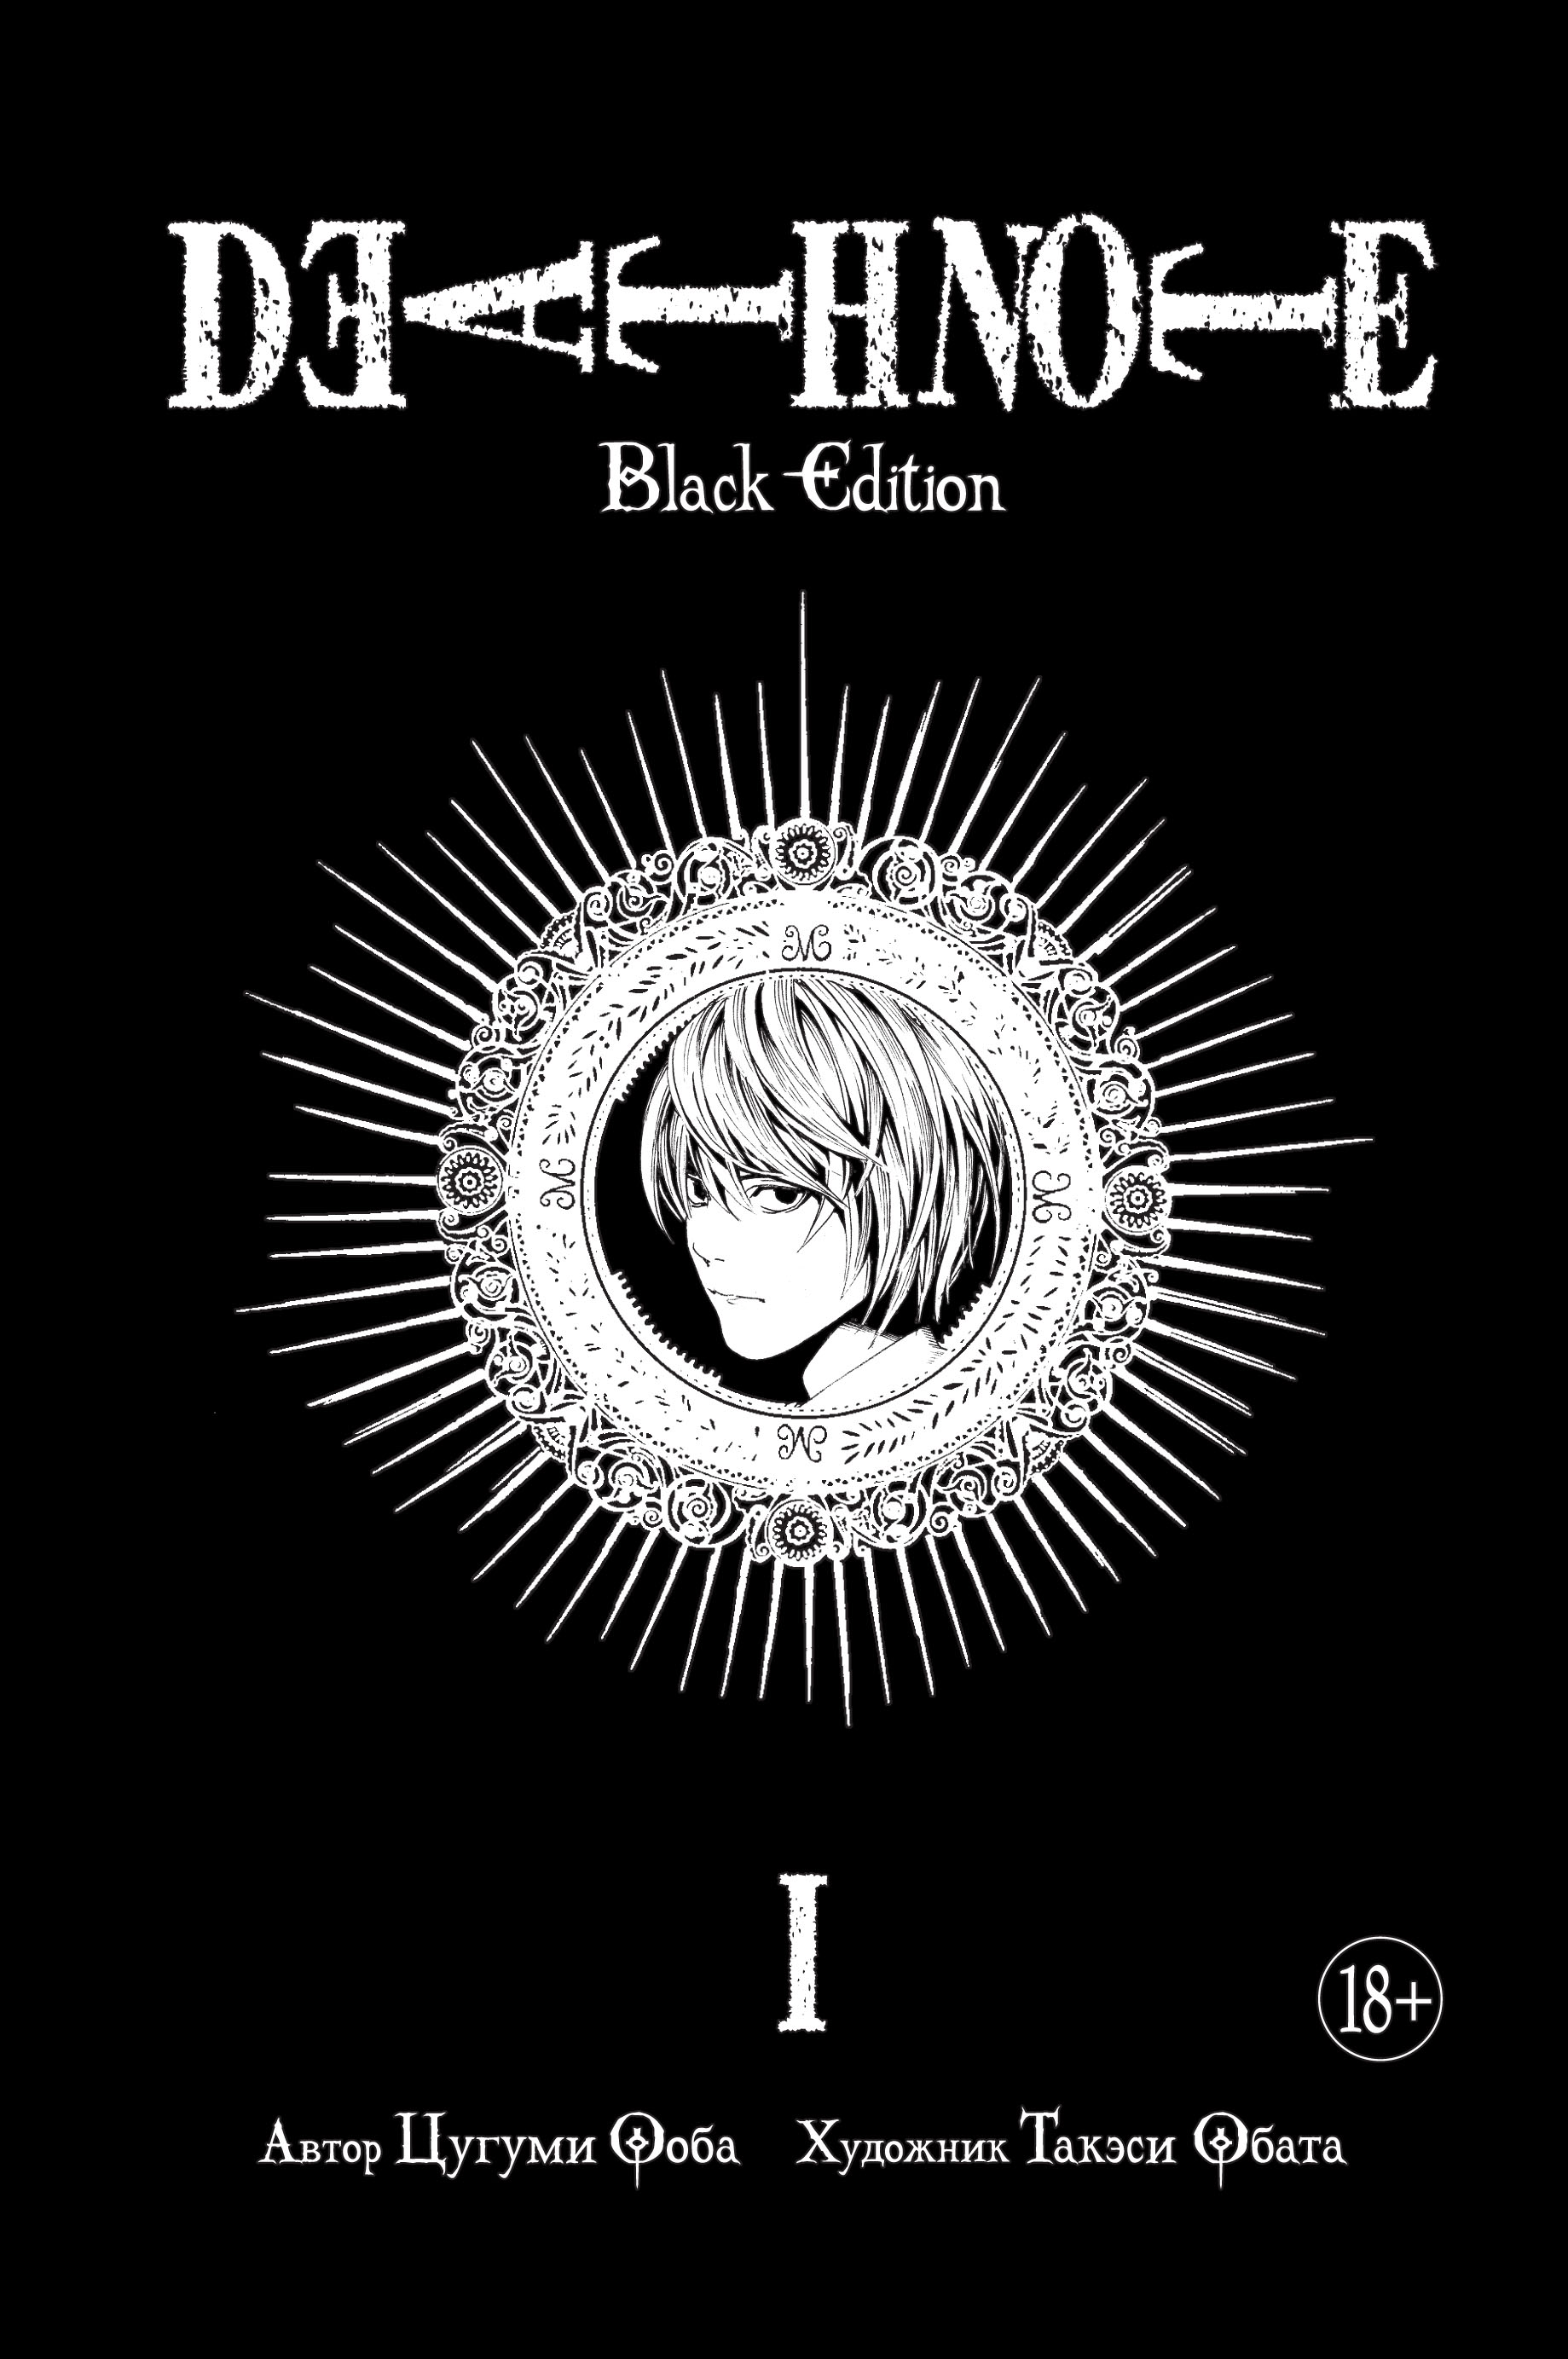 Ооба Цугуми Death Note. Black Edition. Книга 1 ооба цугуми обата такэси death note black edition книга 3 манга